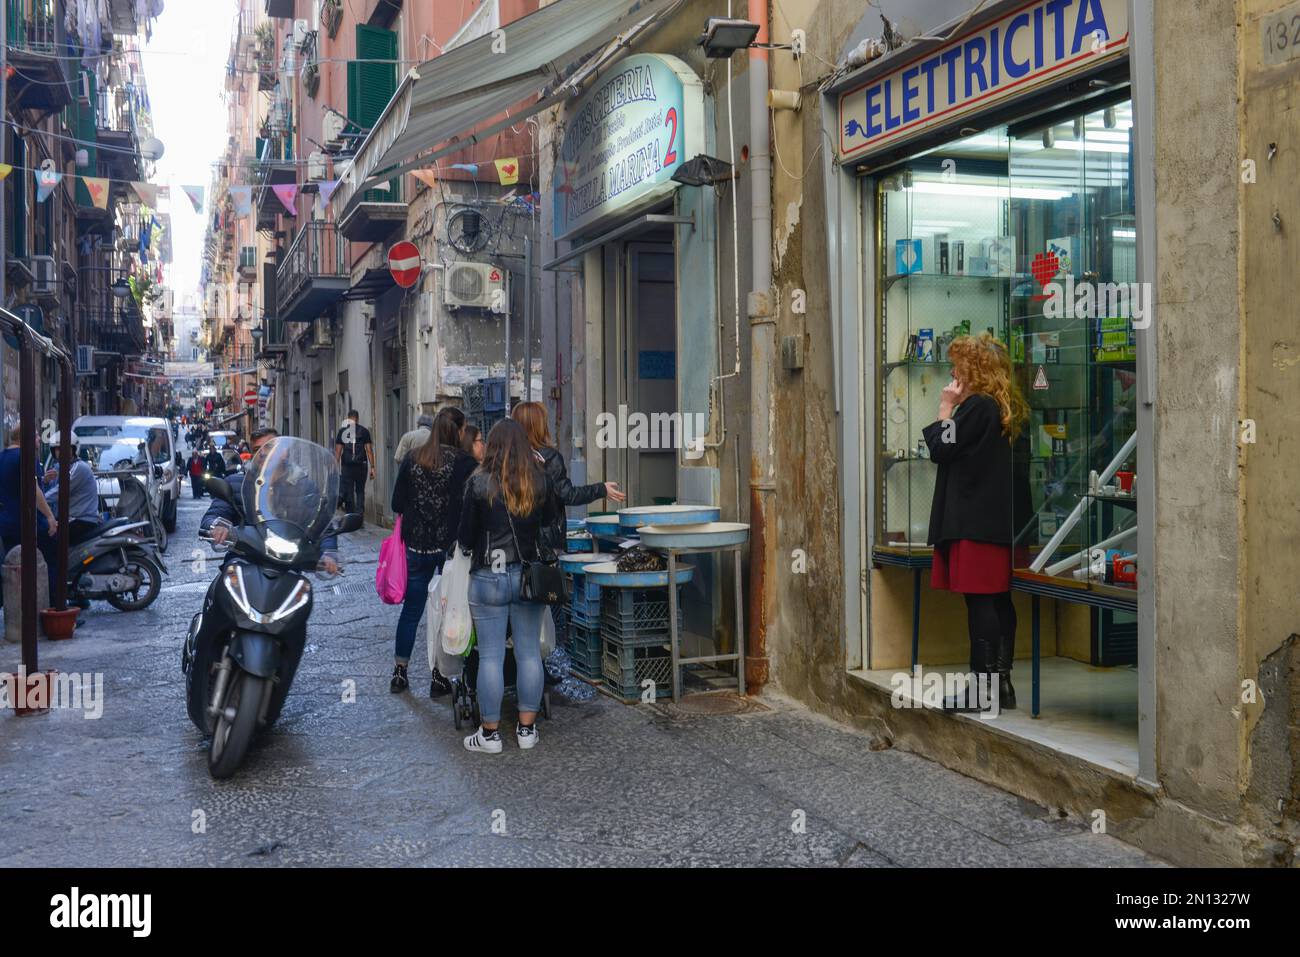 Street scene, Spanish Quarter, Naples, Italy, Europe Stock Photo